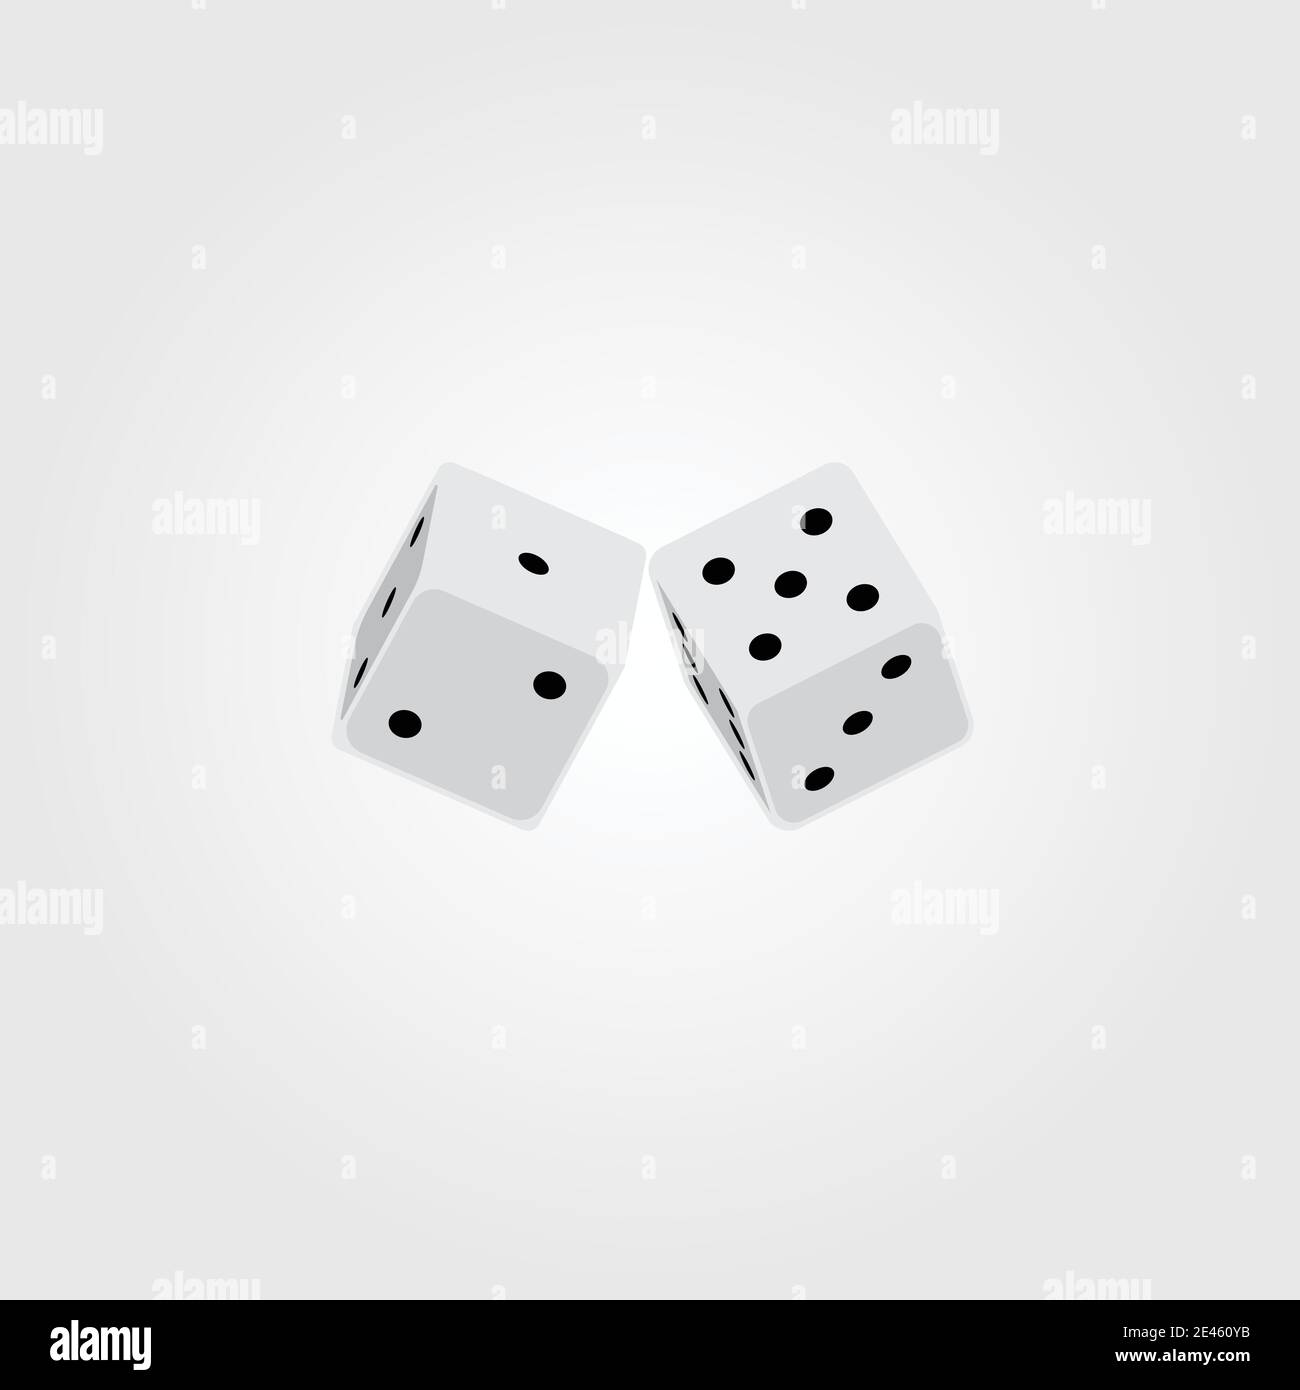 Vector illustration of two white dice, hobbi Stock Vector